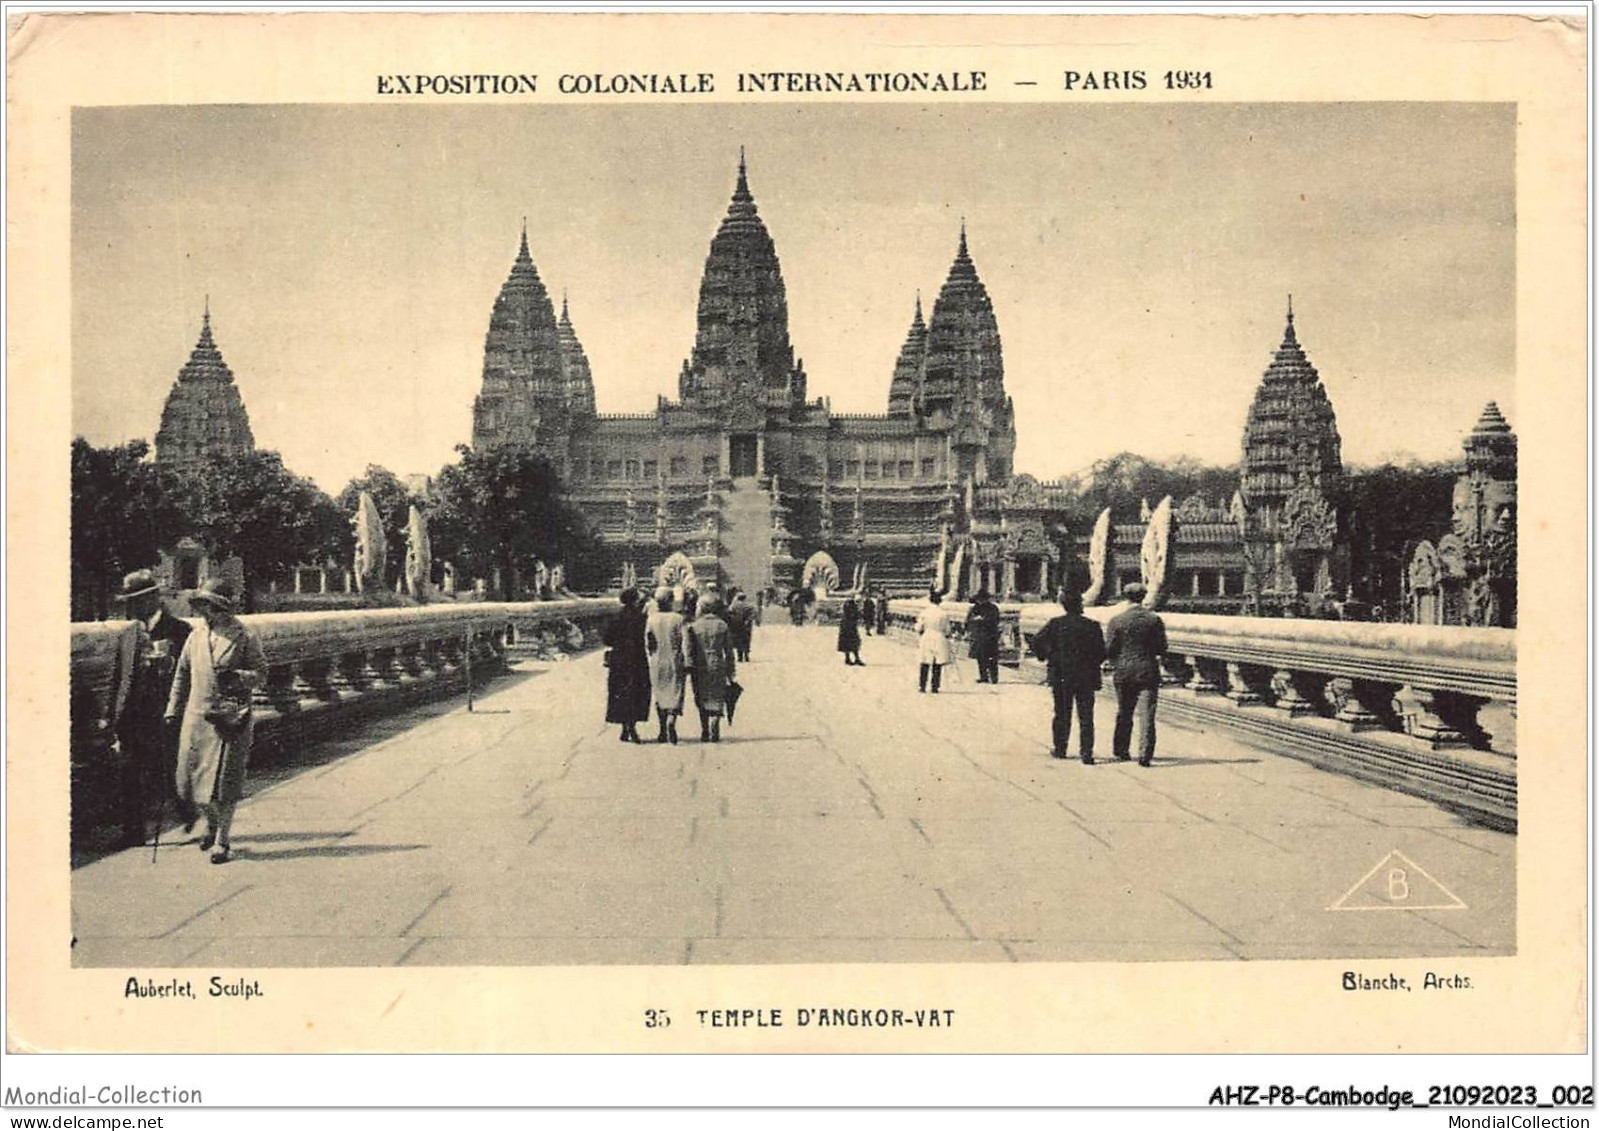 AHZP8-CAMBODGE-0684 - EXPOSITION COLONIALE INTERNATIONALE - PARIS 1931 - TEMPLE D'ANGKOR-VAT - Cambodia